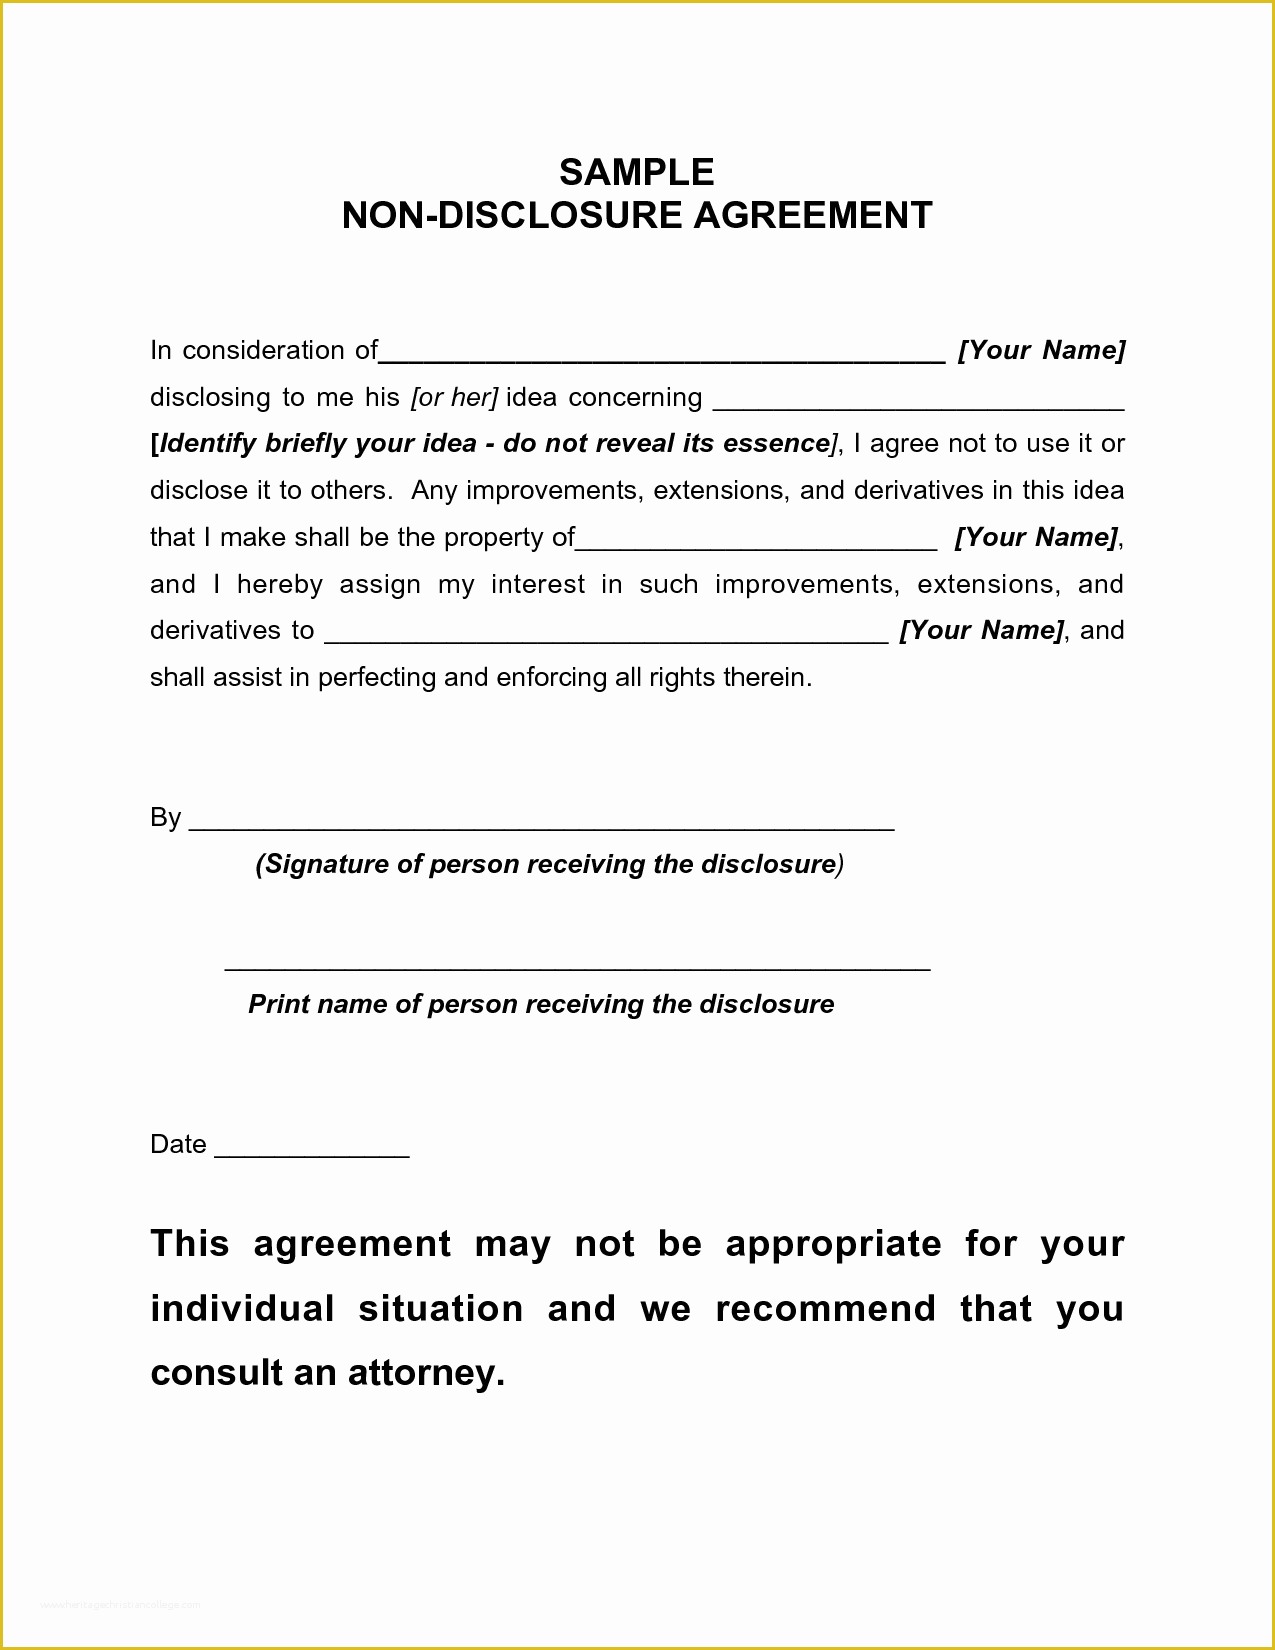 Free Non Disclosure Agreement Template Of Non Disclosure Agreement Sample Free Printable Documents